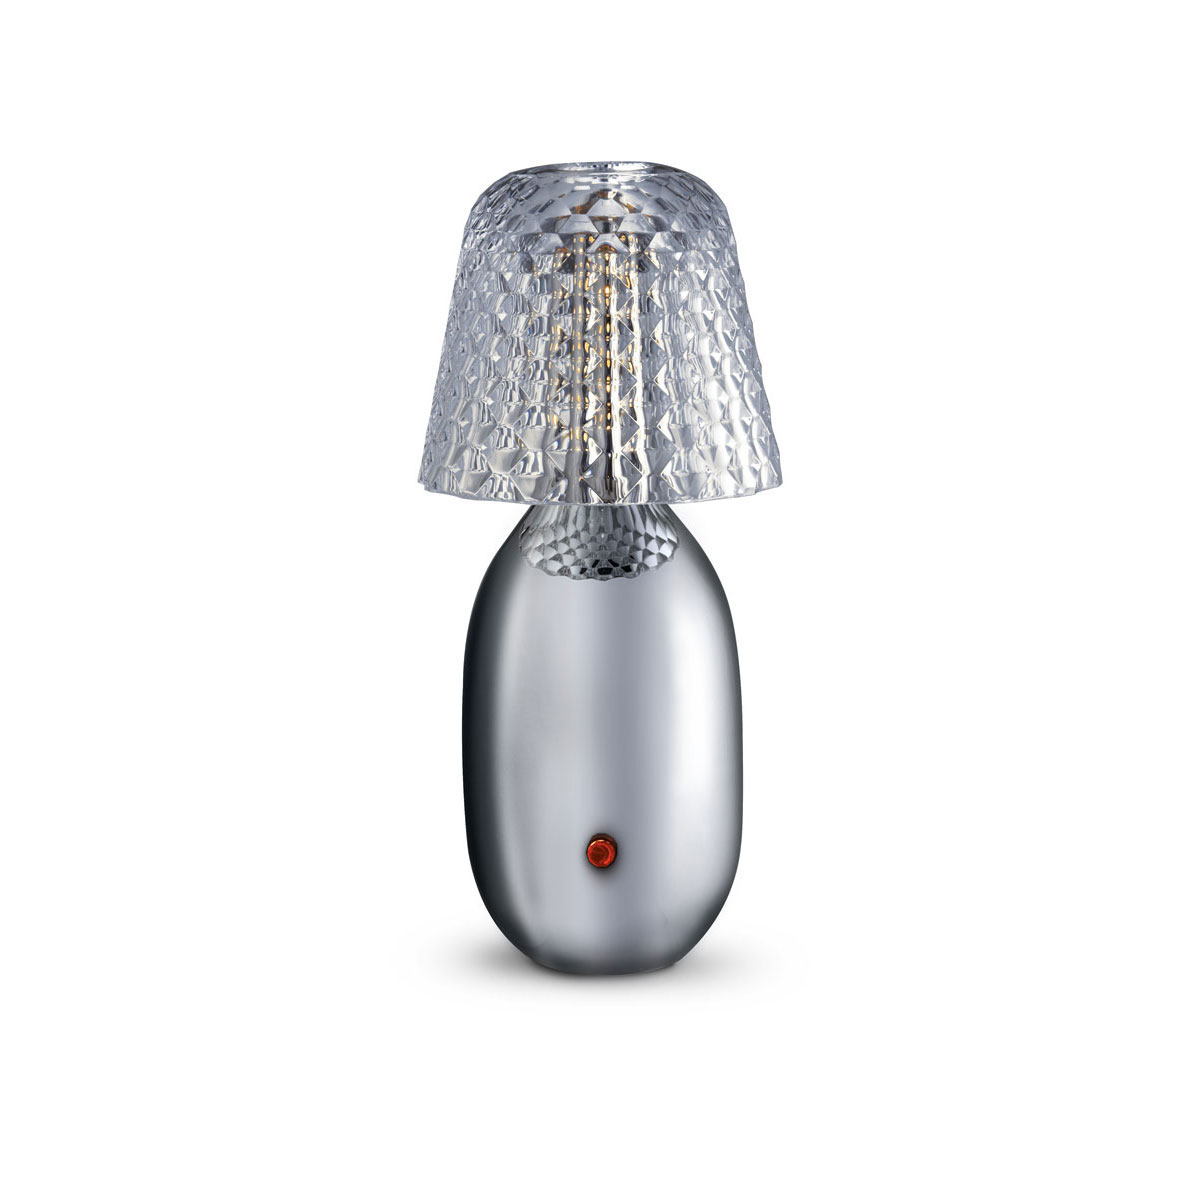 Baccarat Crystal Candy Light Lamp, Platinum